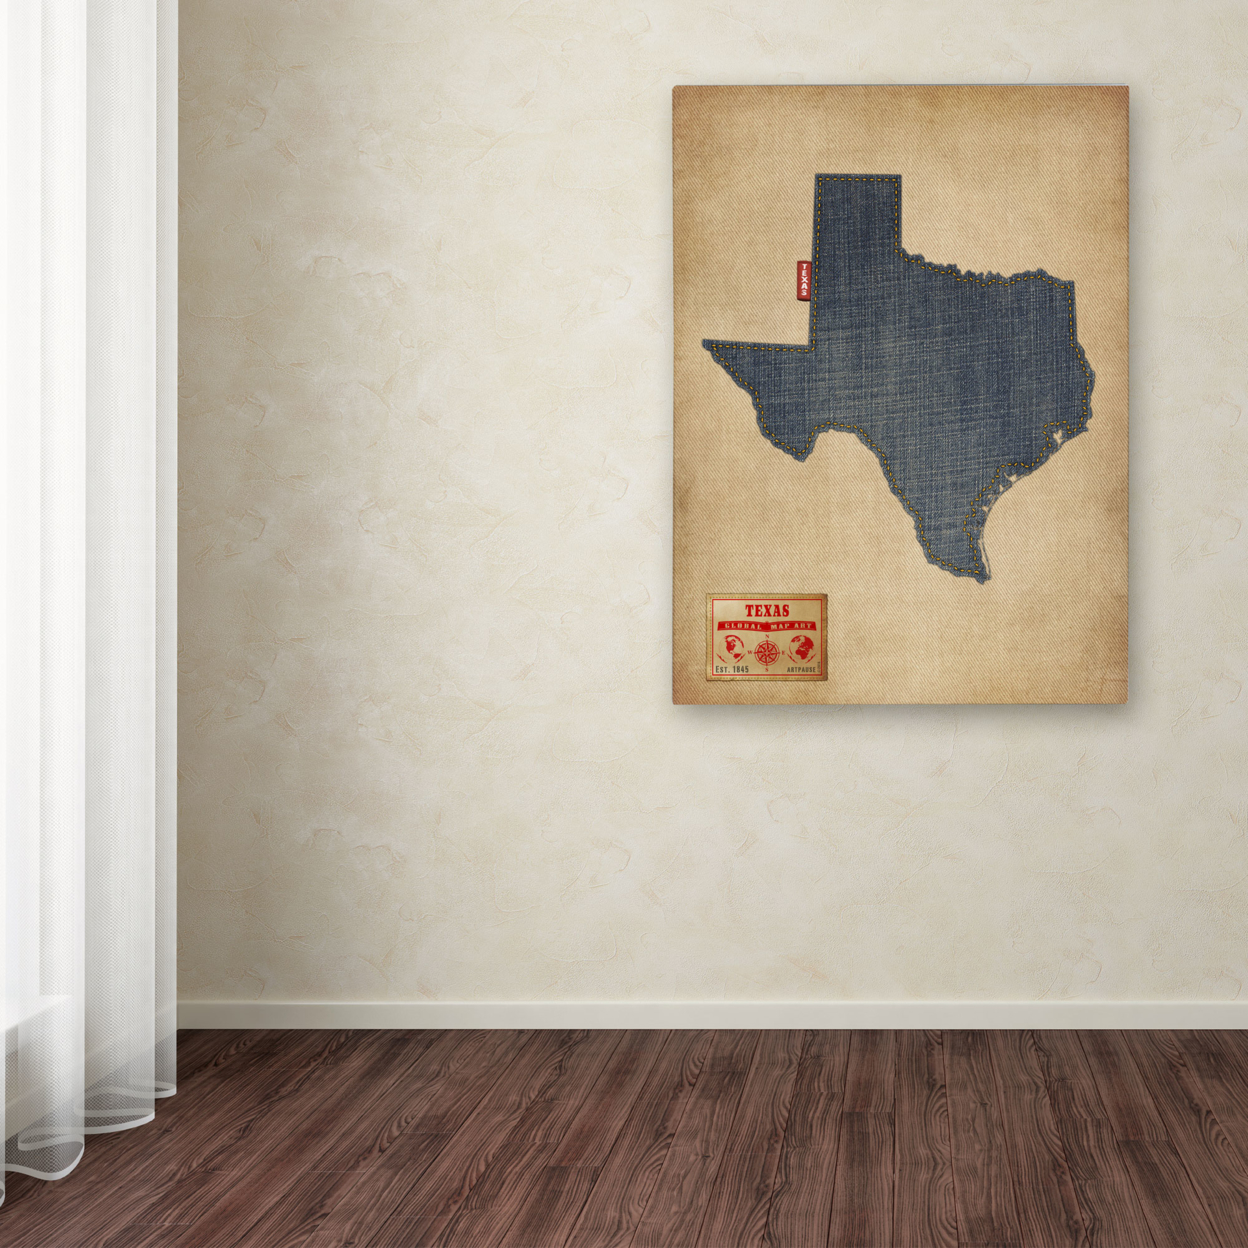 Michael Tompsett 'Texas Map Denim Jeans Style' Canvas Wall Art 35 X 47 Inches